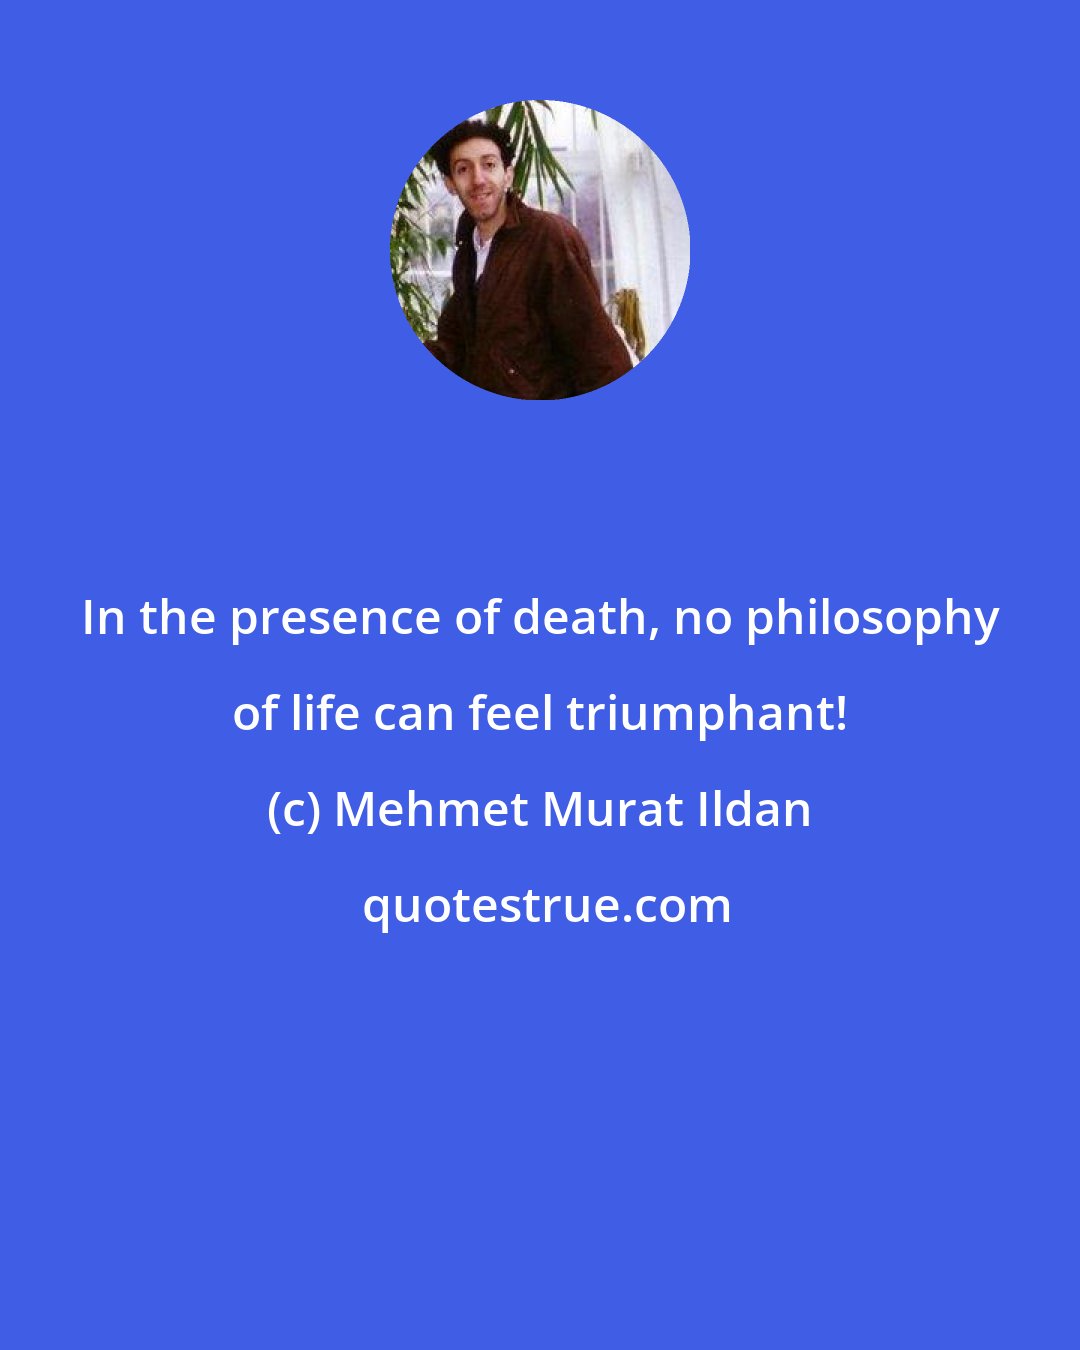 Mehmet Murat Ildan: In the presence of death, no philosophy of life can feel triumphant!